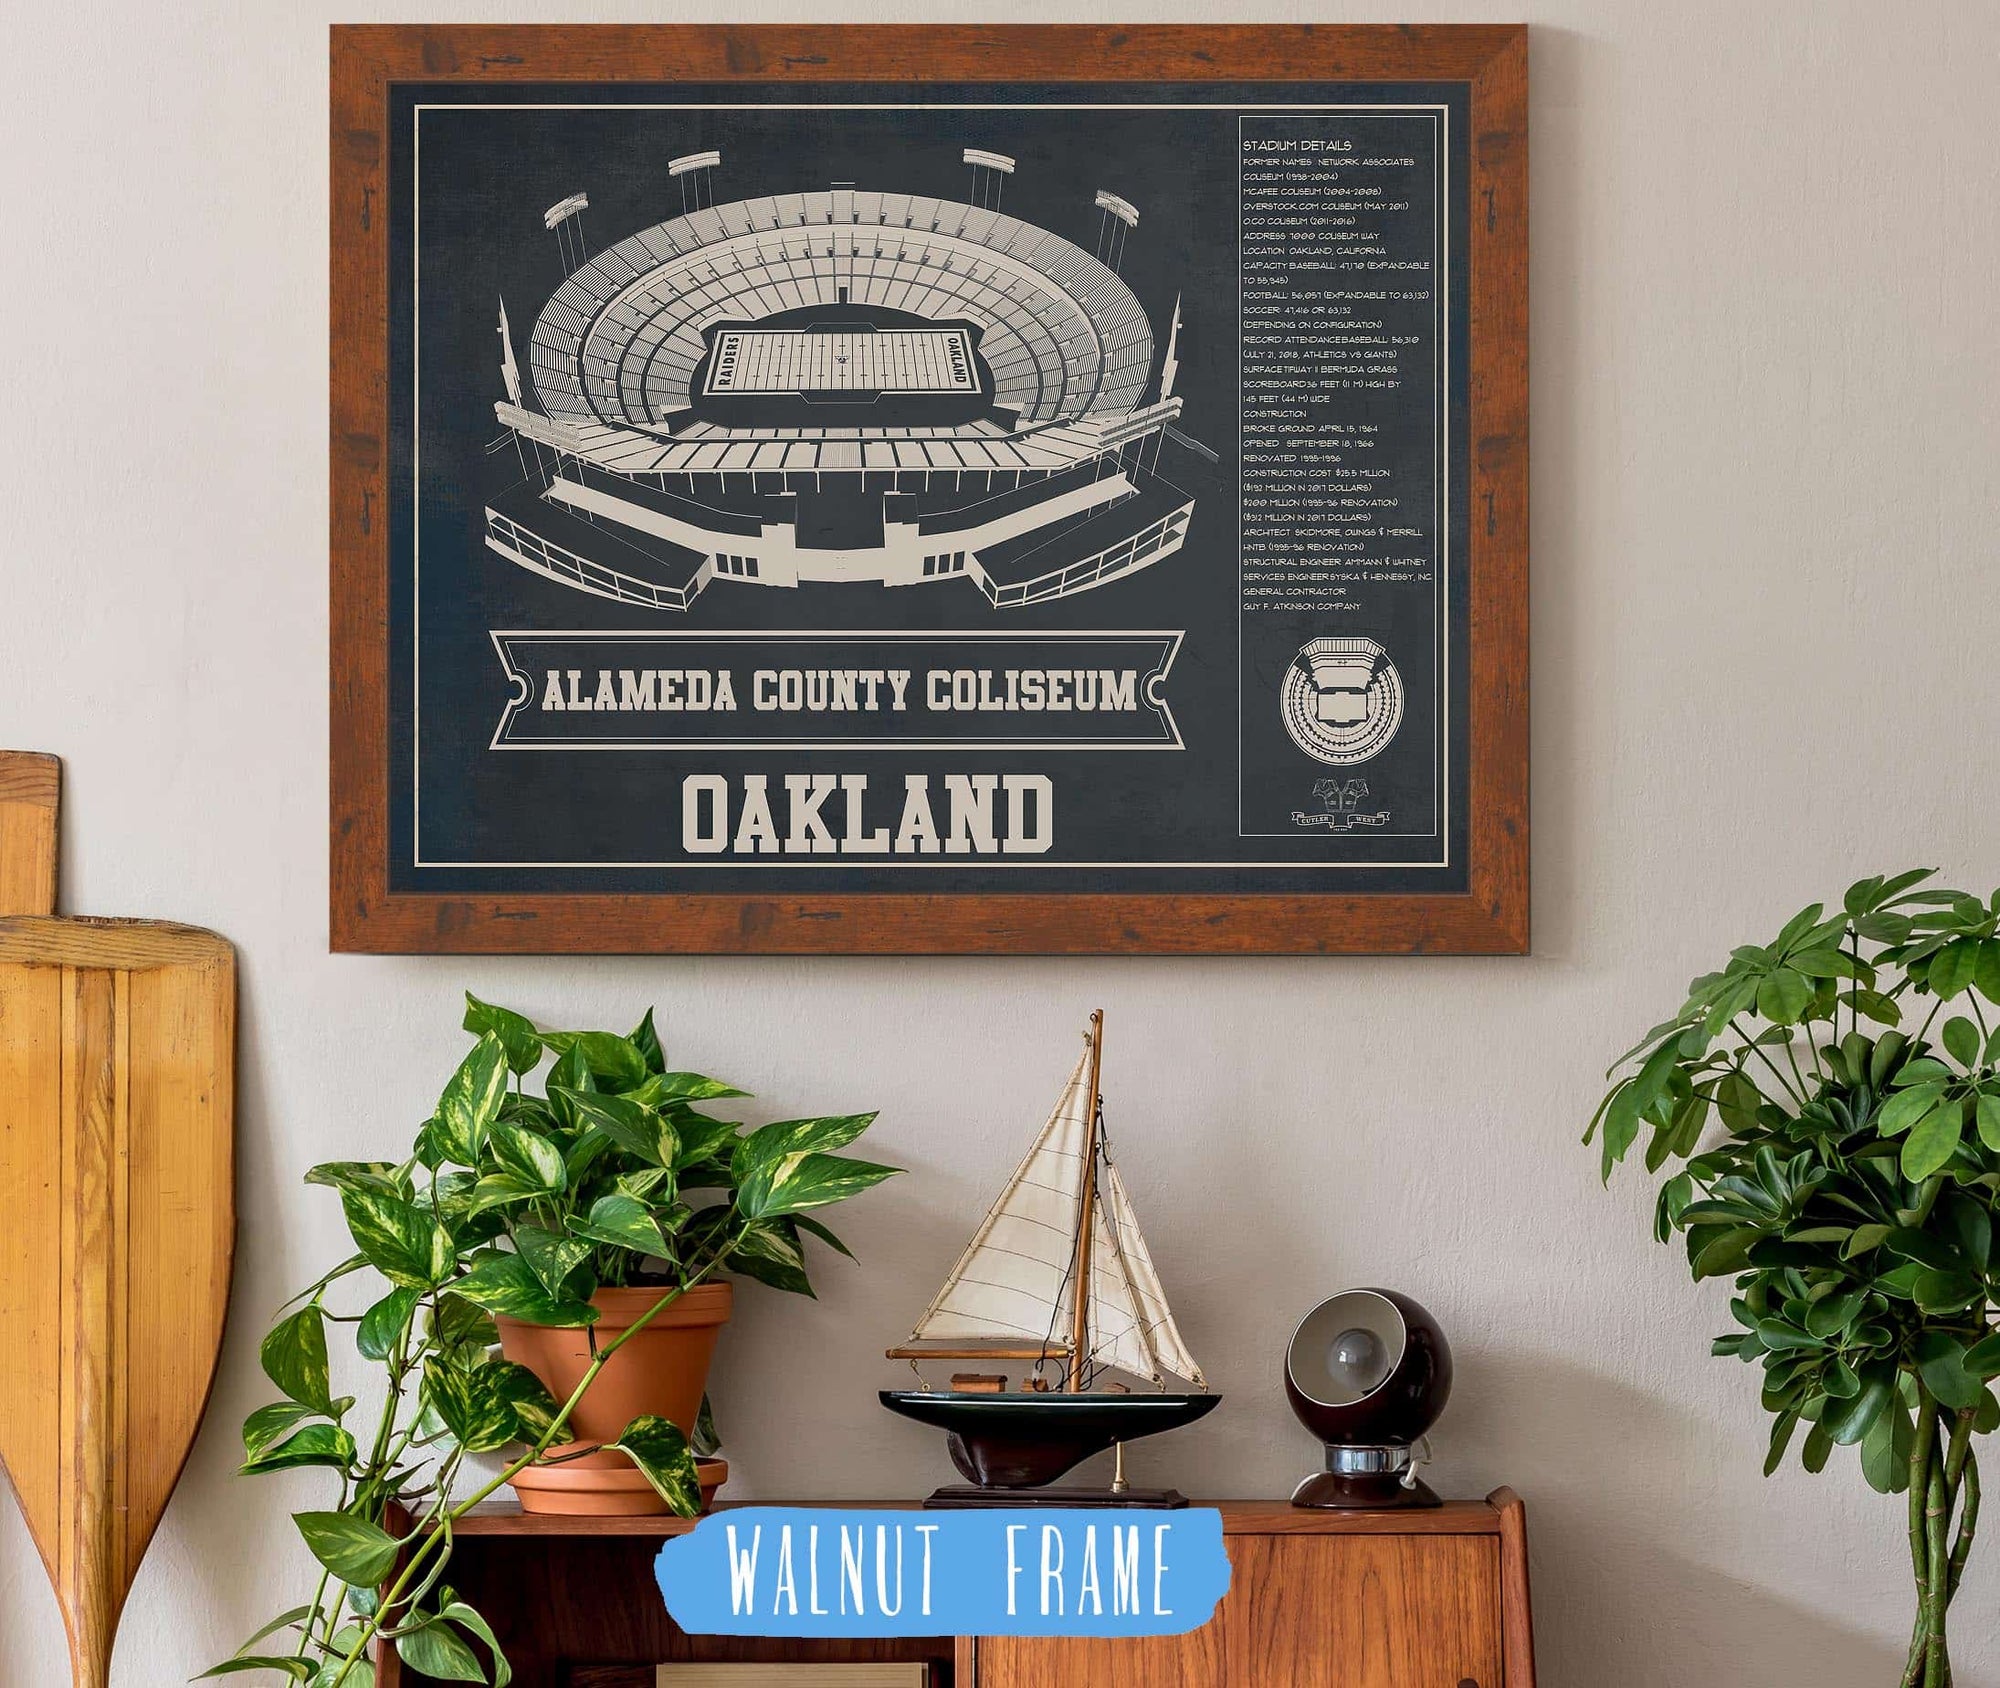 Cutler West Oakland Raiders Alameda County Coliseum Vintage - Vintage Football Print